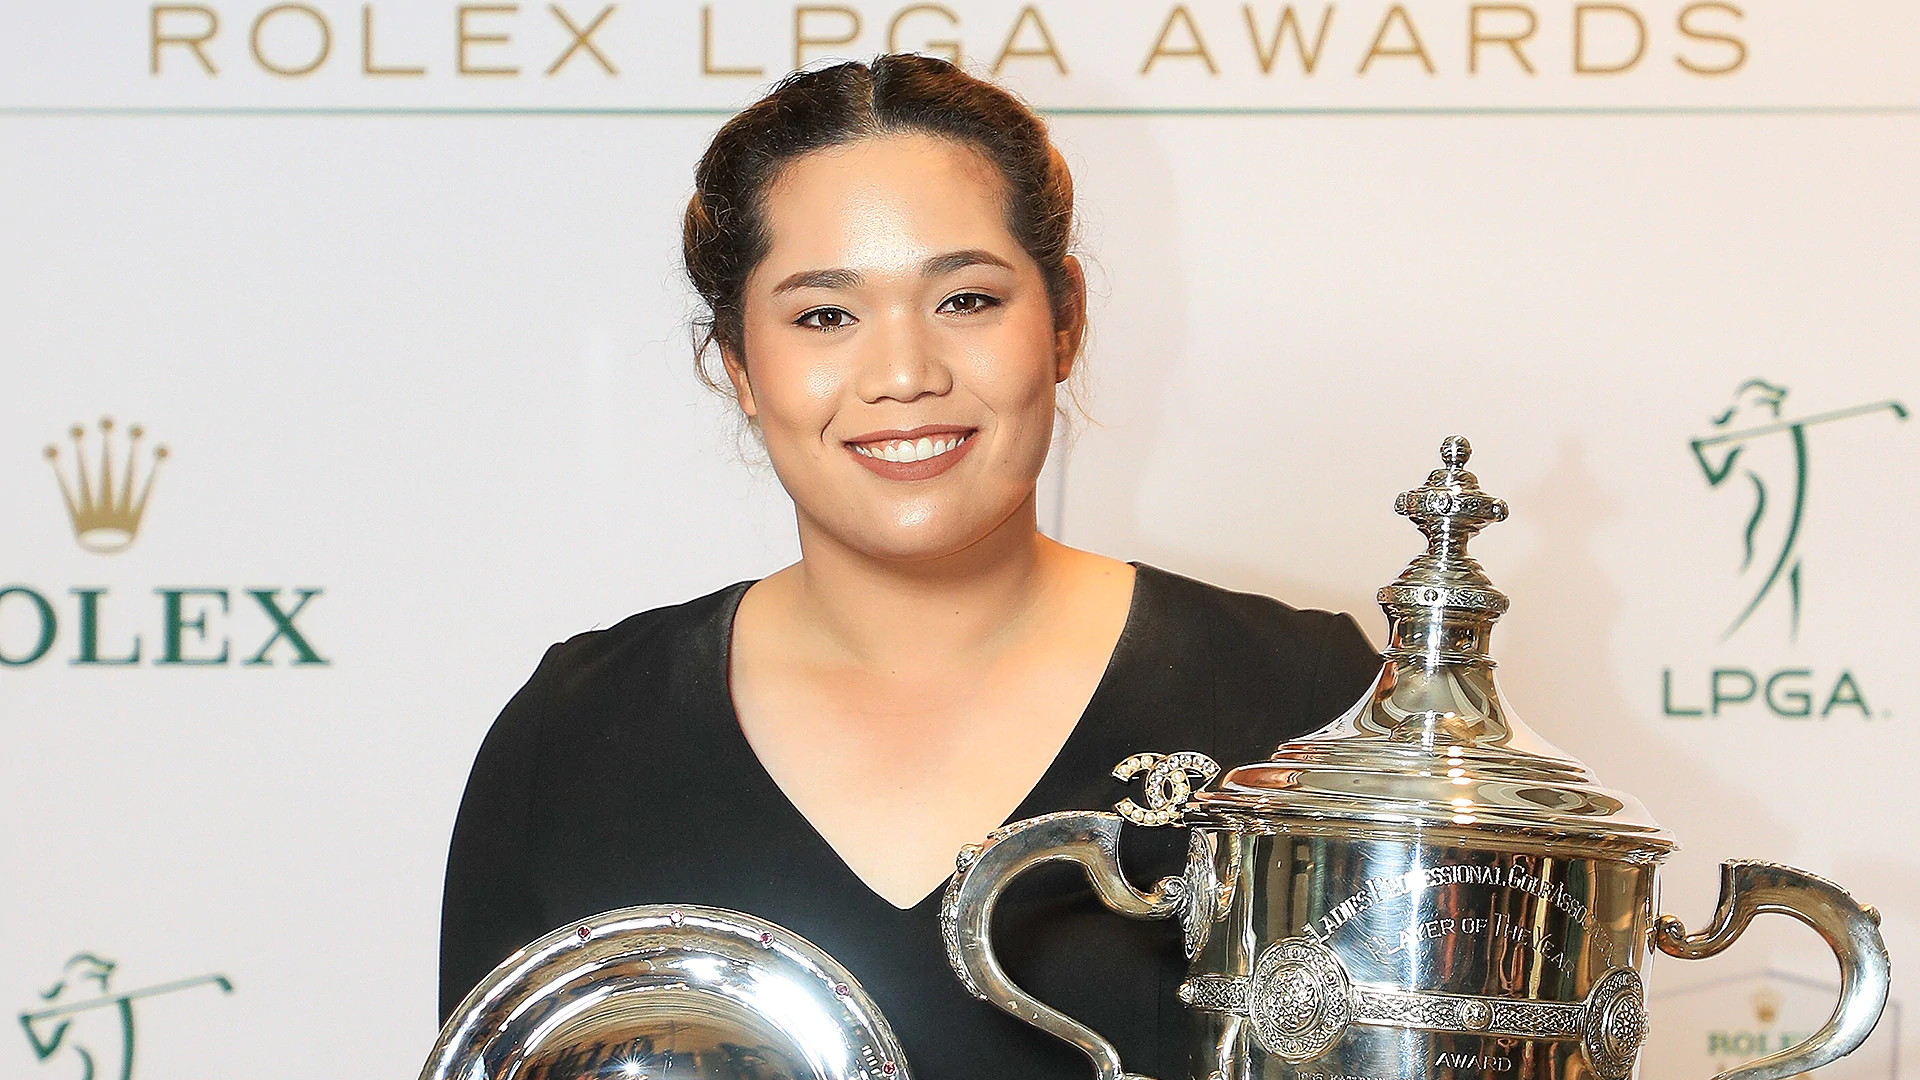 A. Jutanguarn cleans up at LPGA Rolex Awards